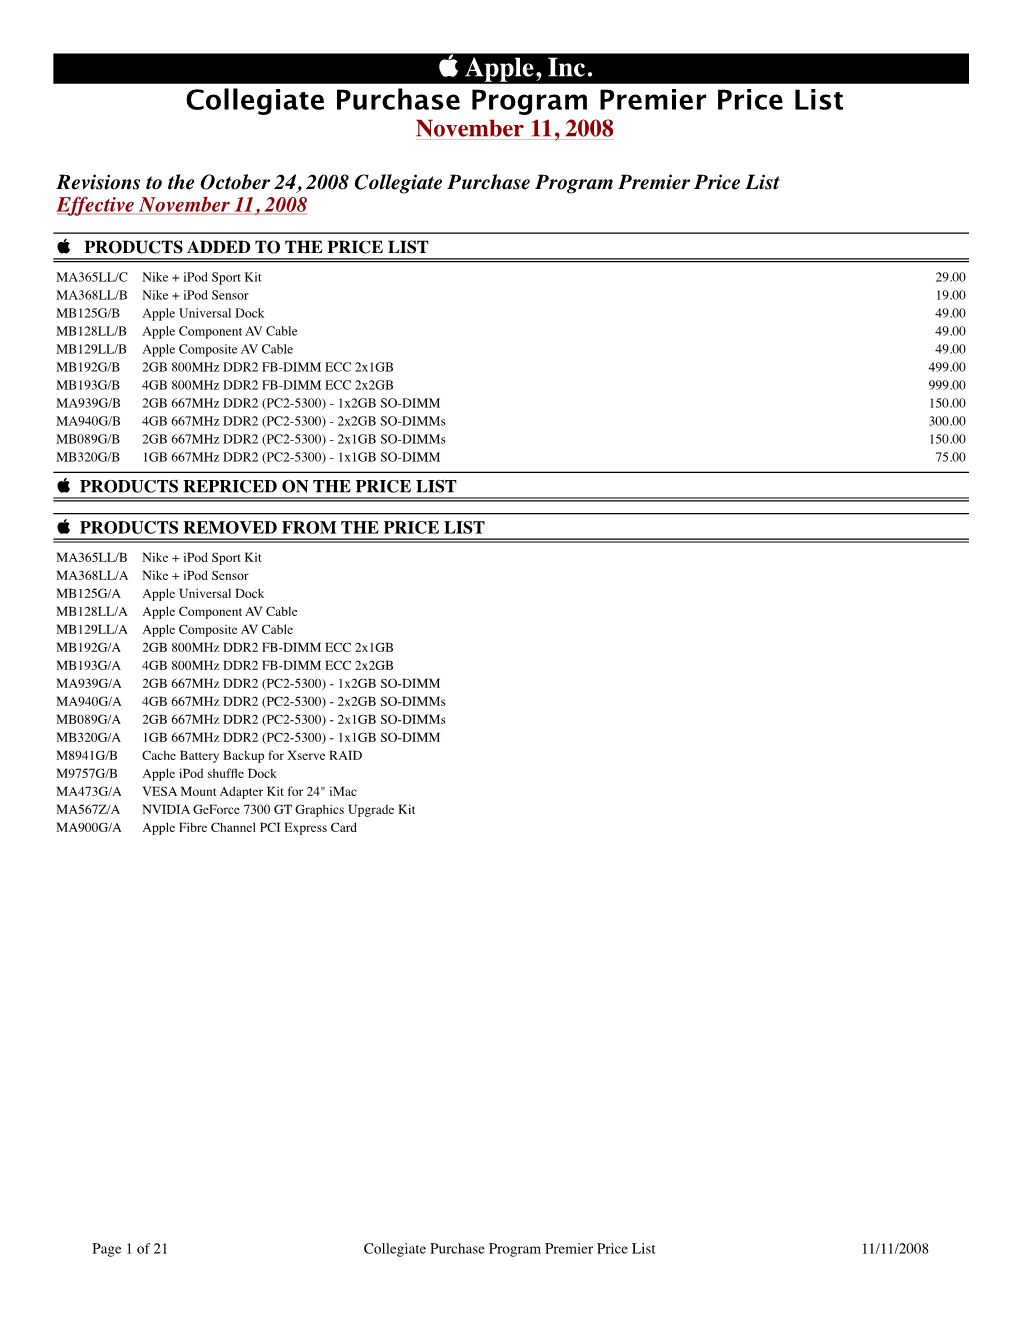 Apple, Inc. Collegiate Purchase Program Premier Price List November 11, 2008